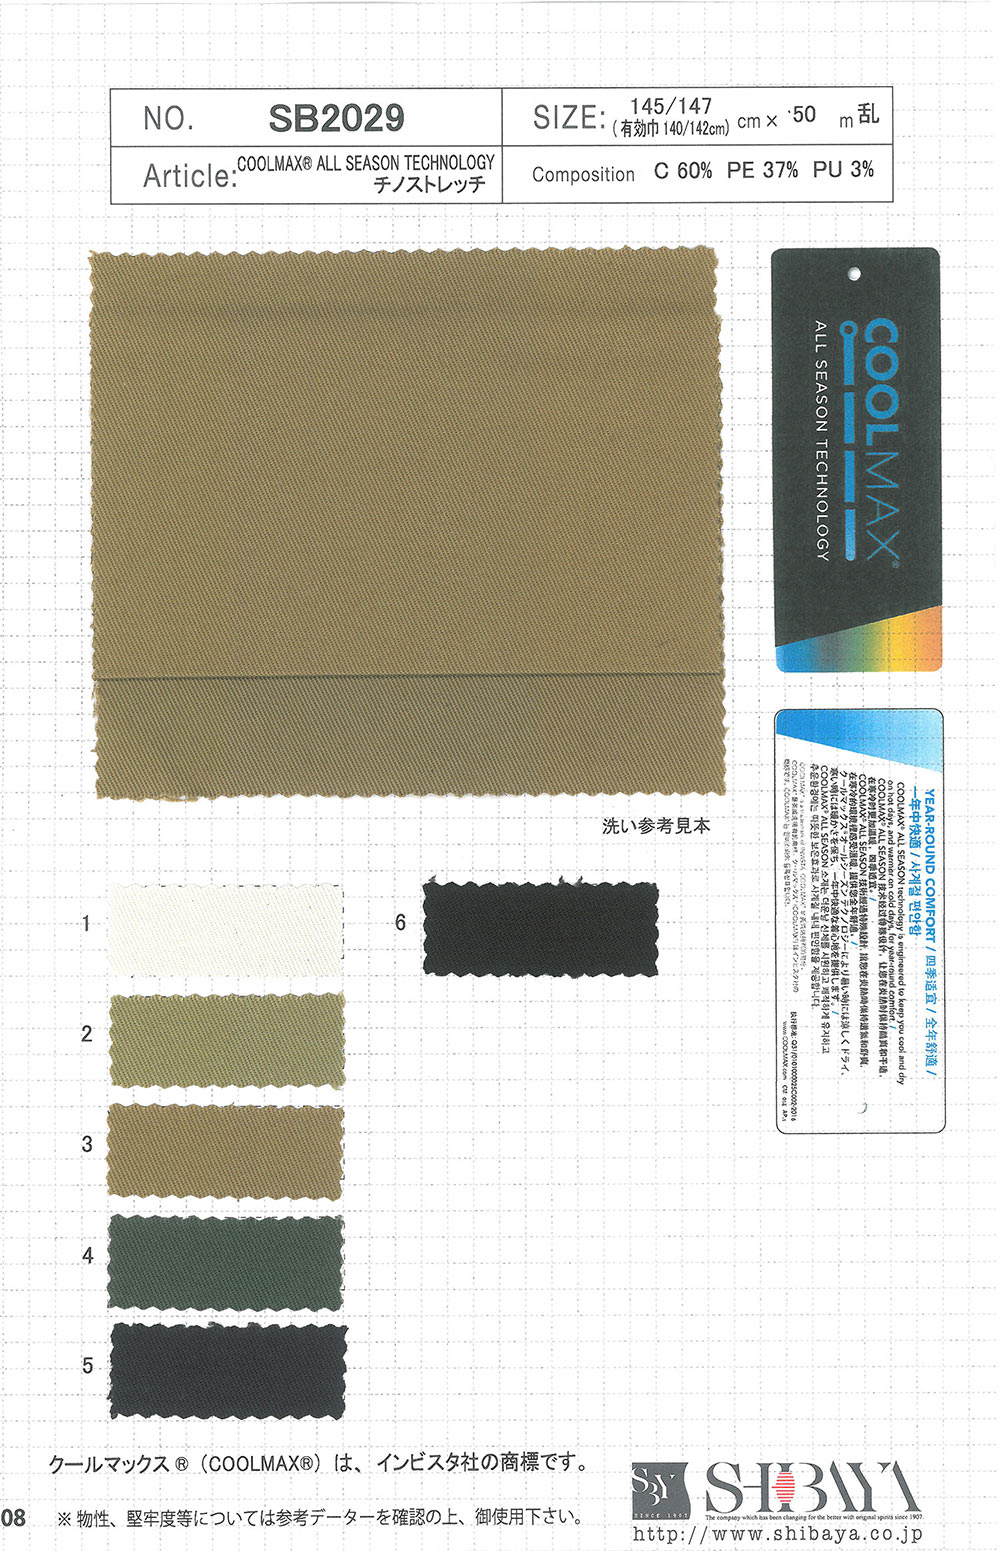 SB2029 COOLMAX ALL SEASON TECHNOLOGY Chino Stretch[Textile / Fabric] SHIBAYA